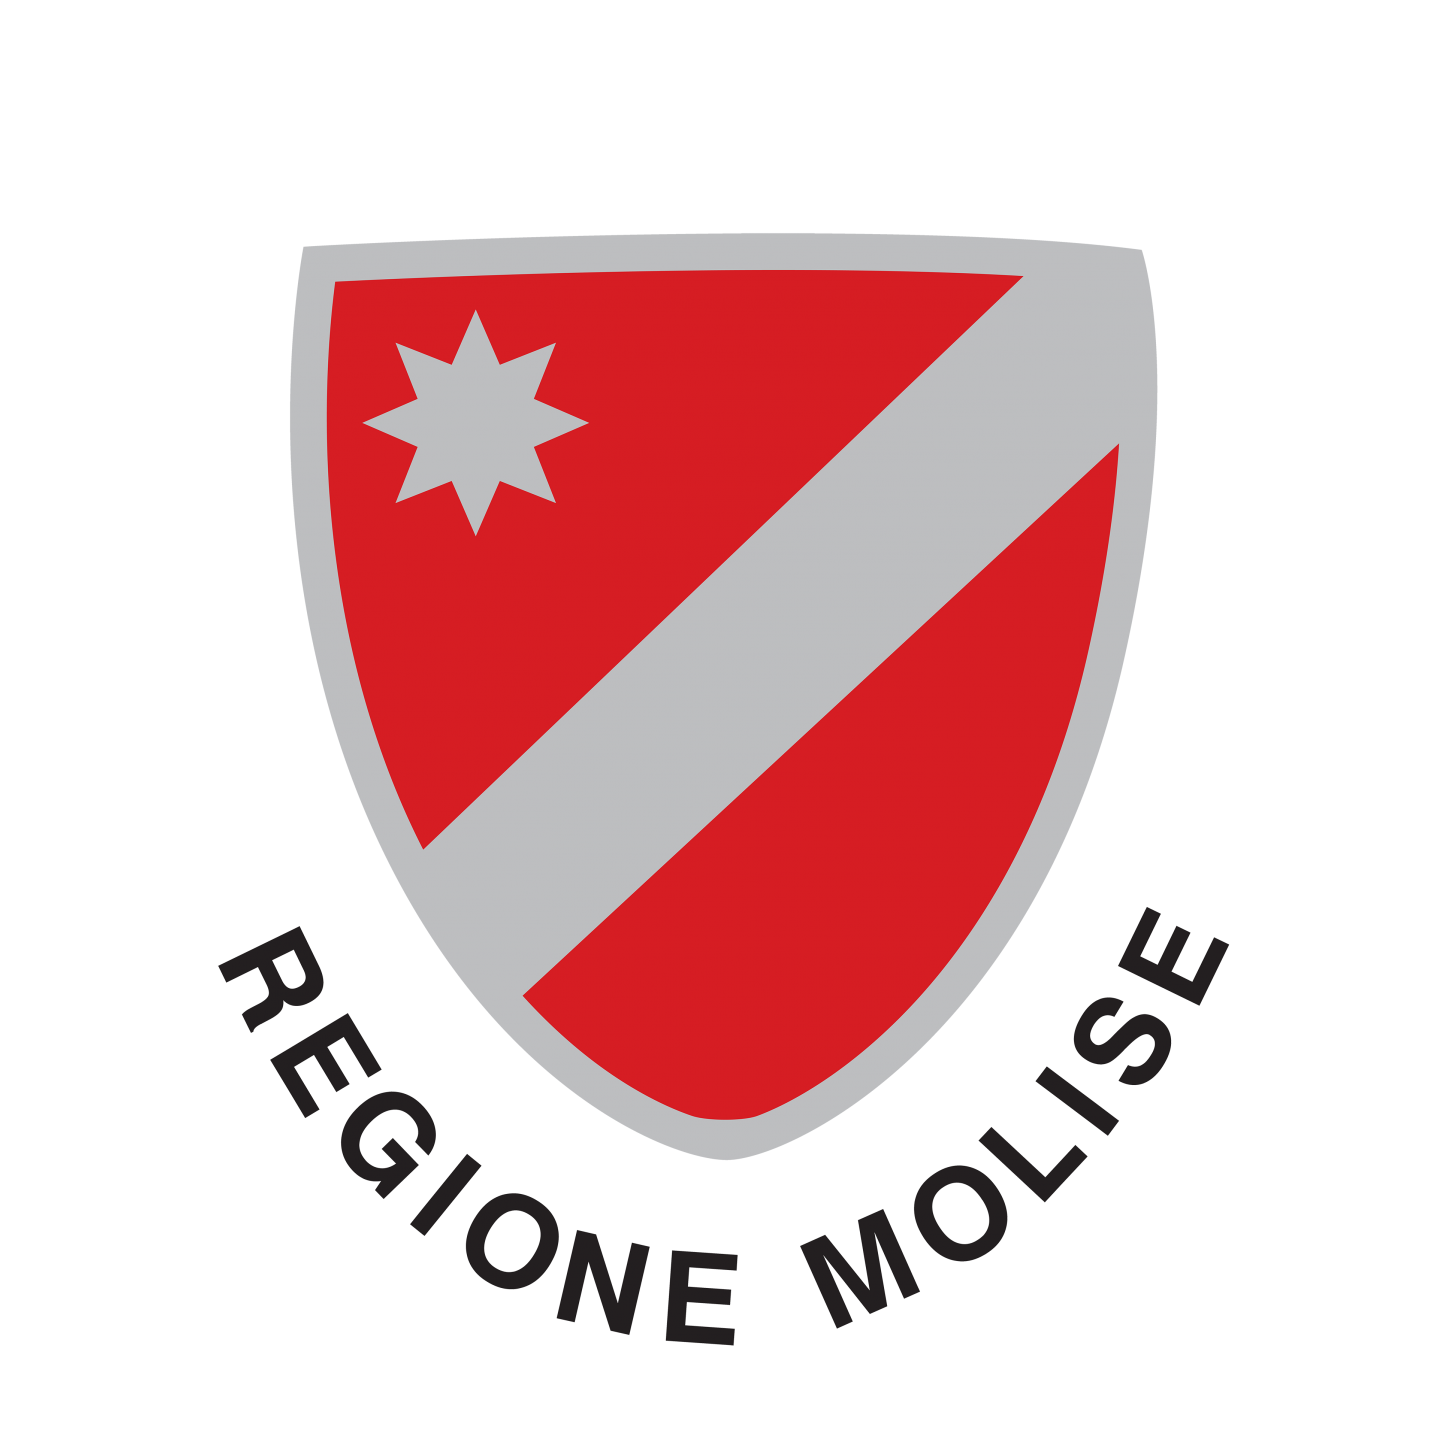 Regione Molise : Brand Short Description Type Here.